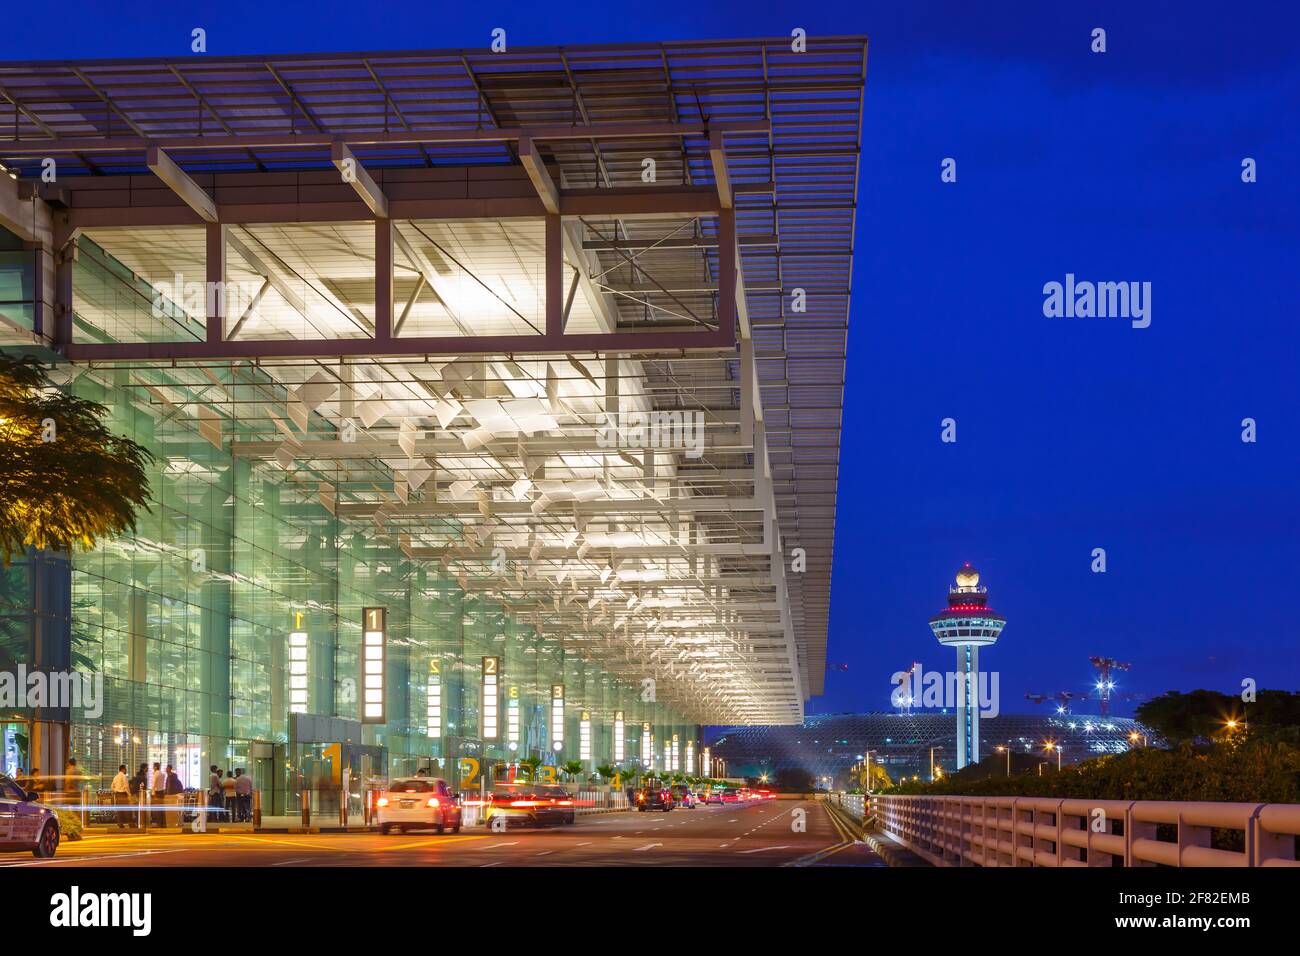 CHANGI Terminal 3 – SINGAPORE